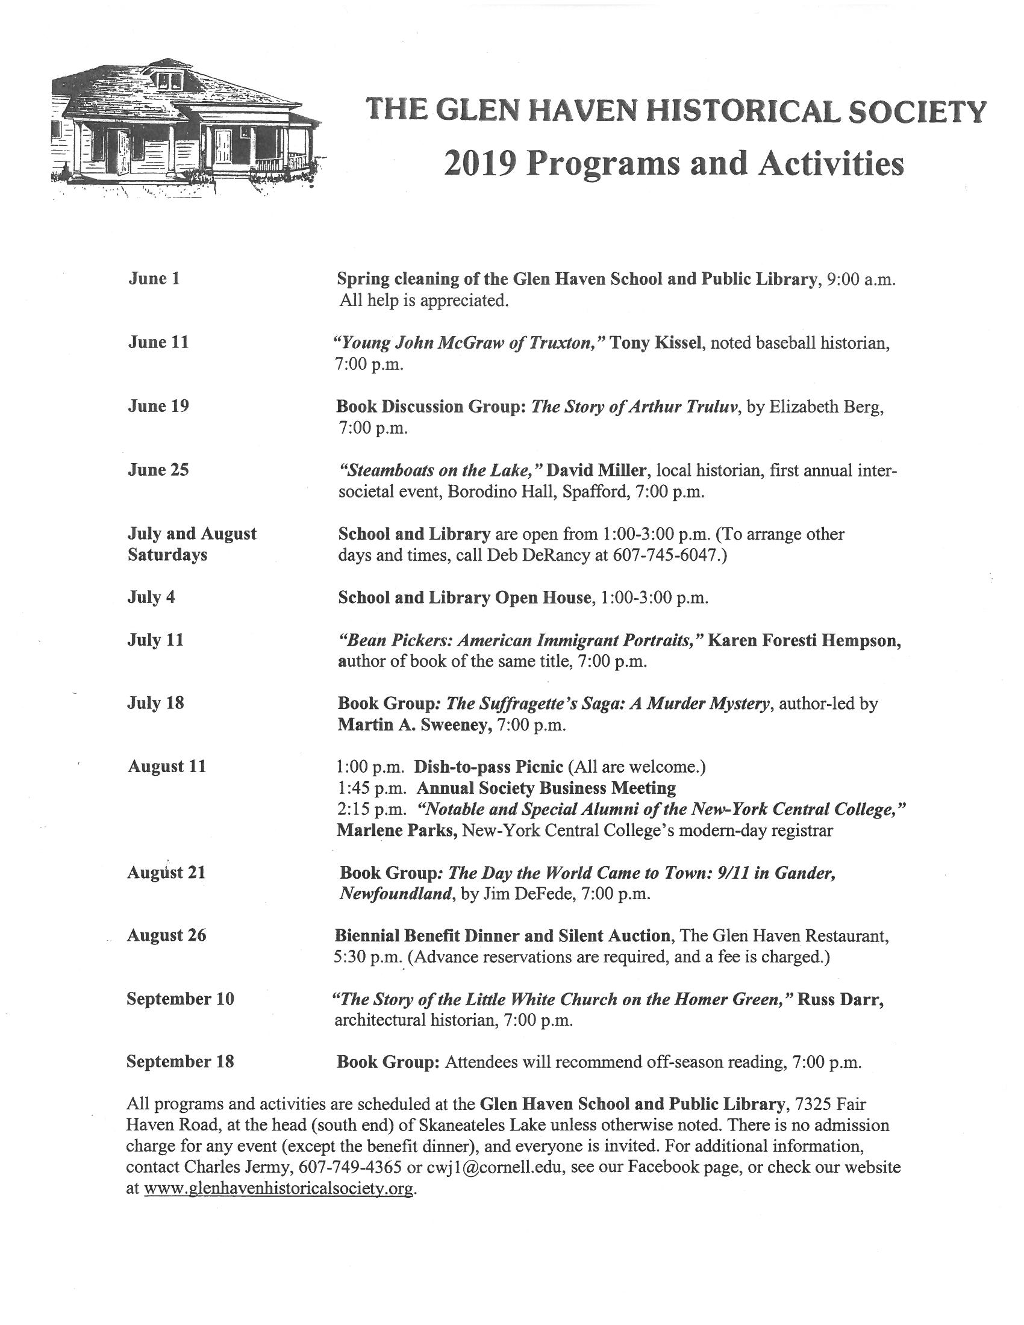 2019 event schedule